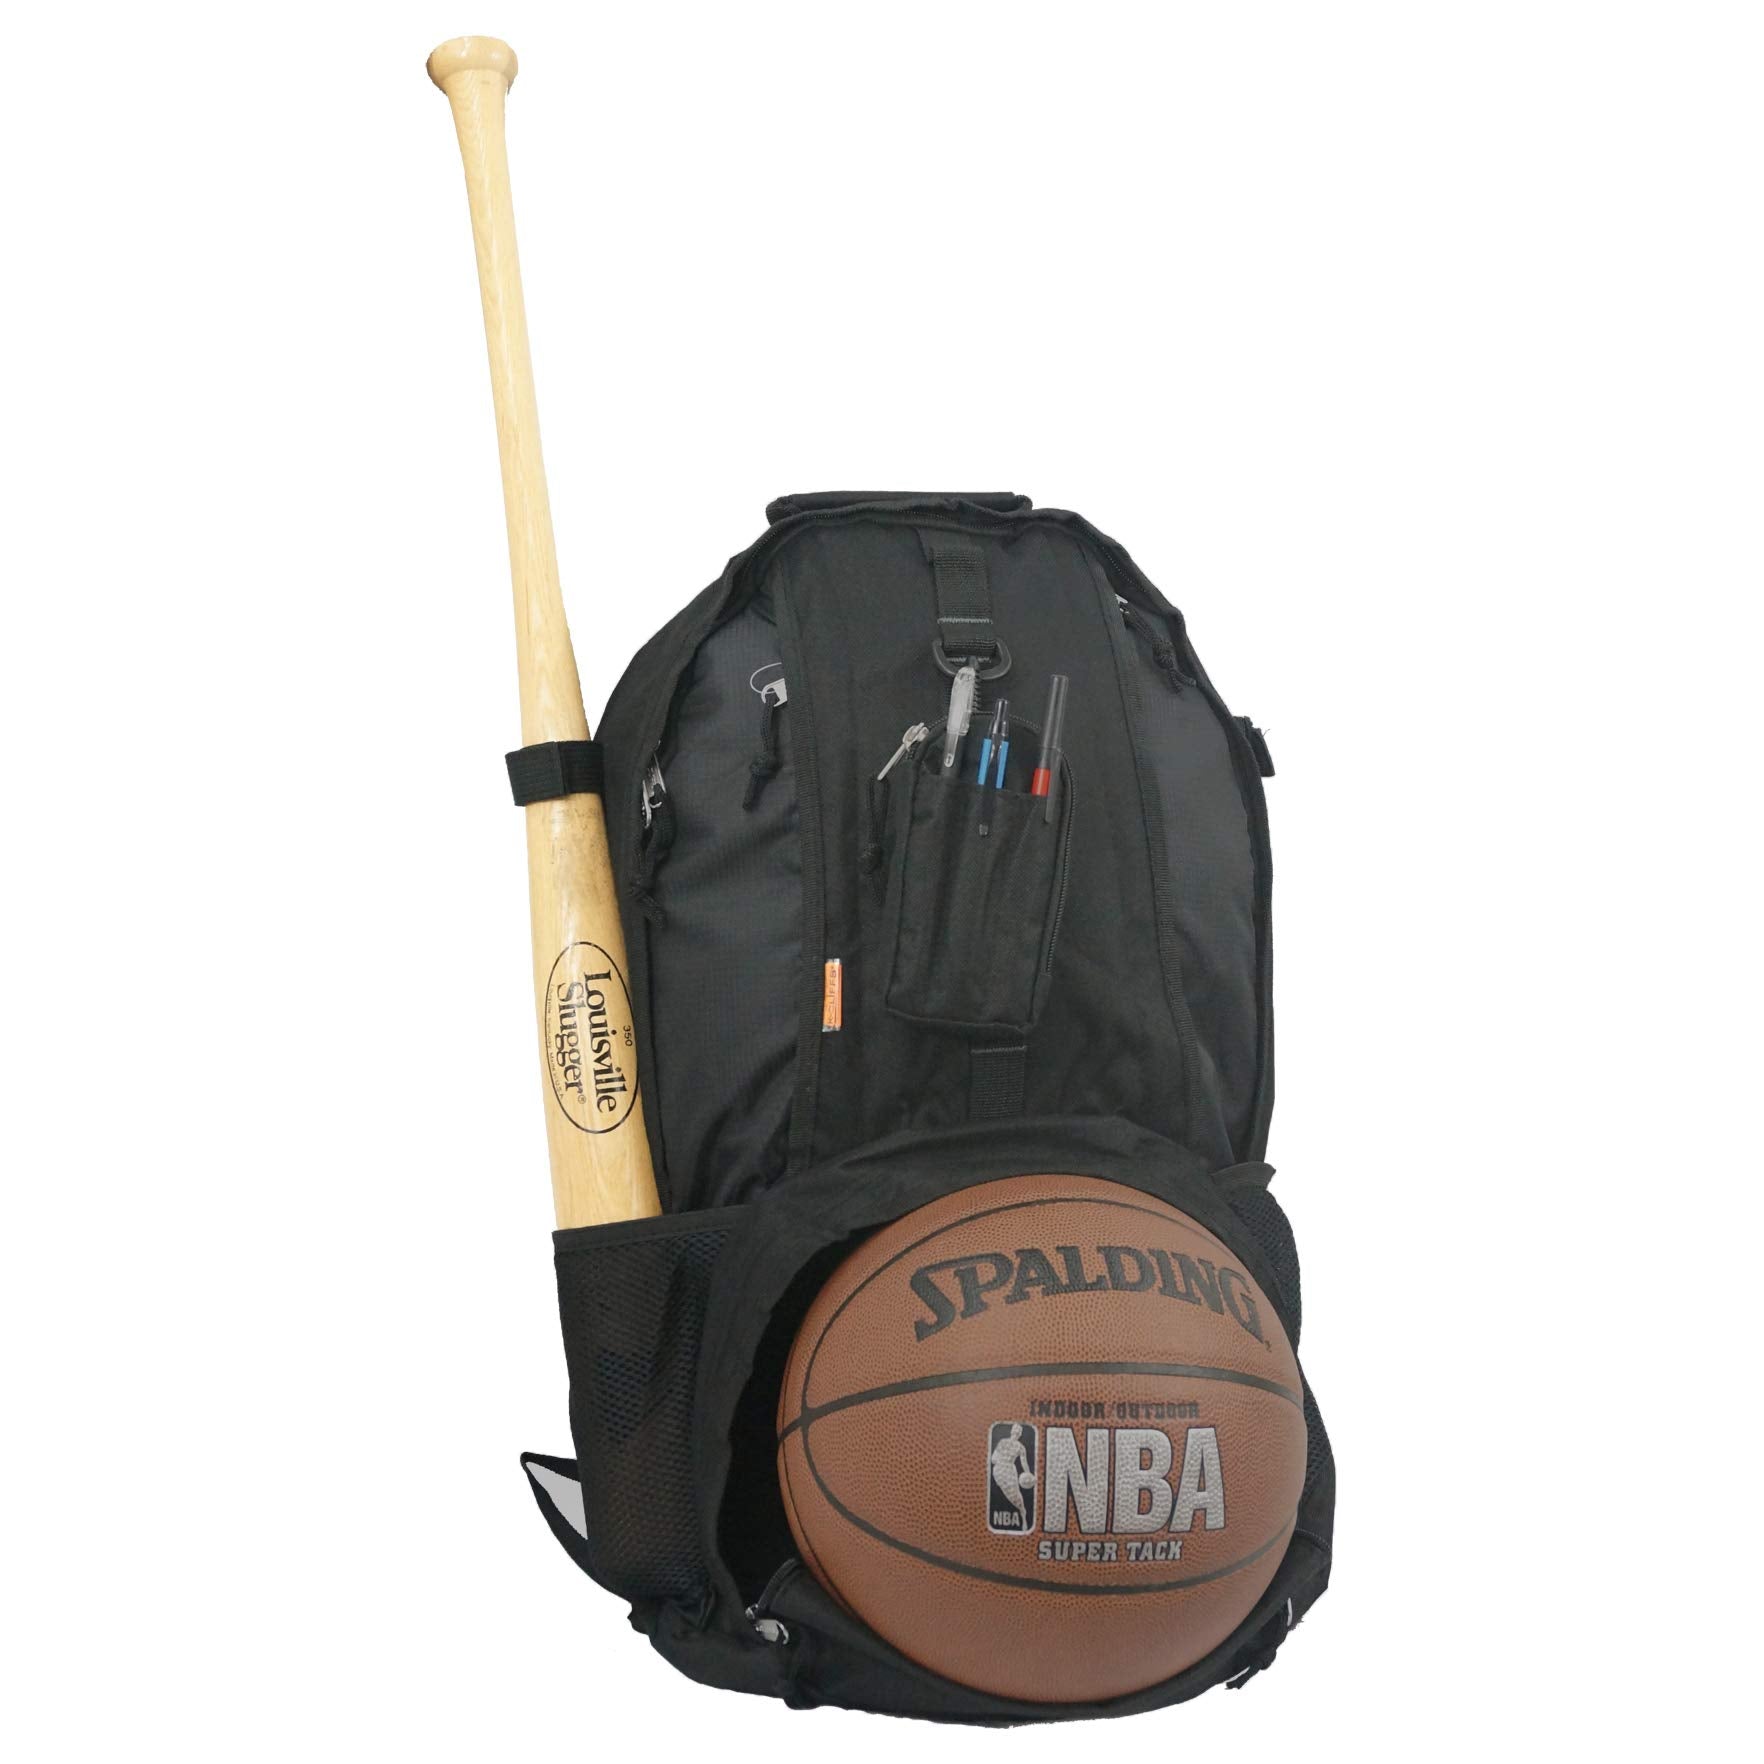 louisville baseball backpack